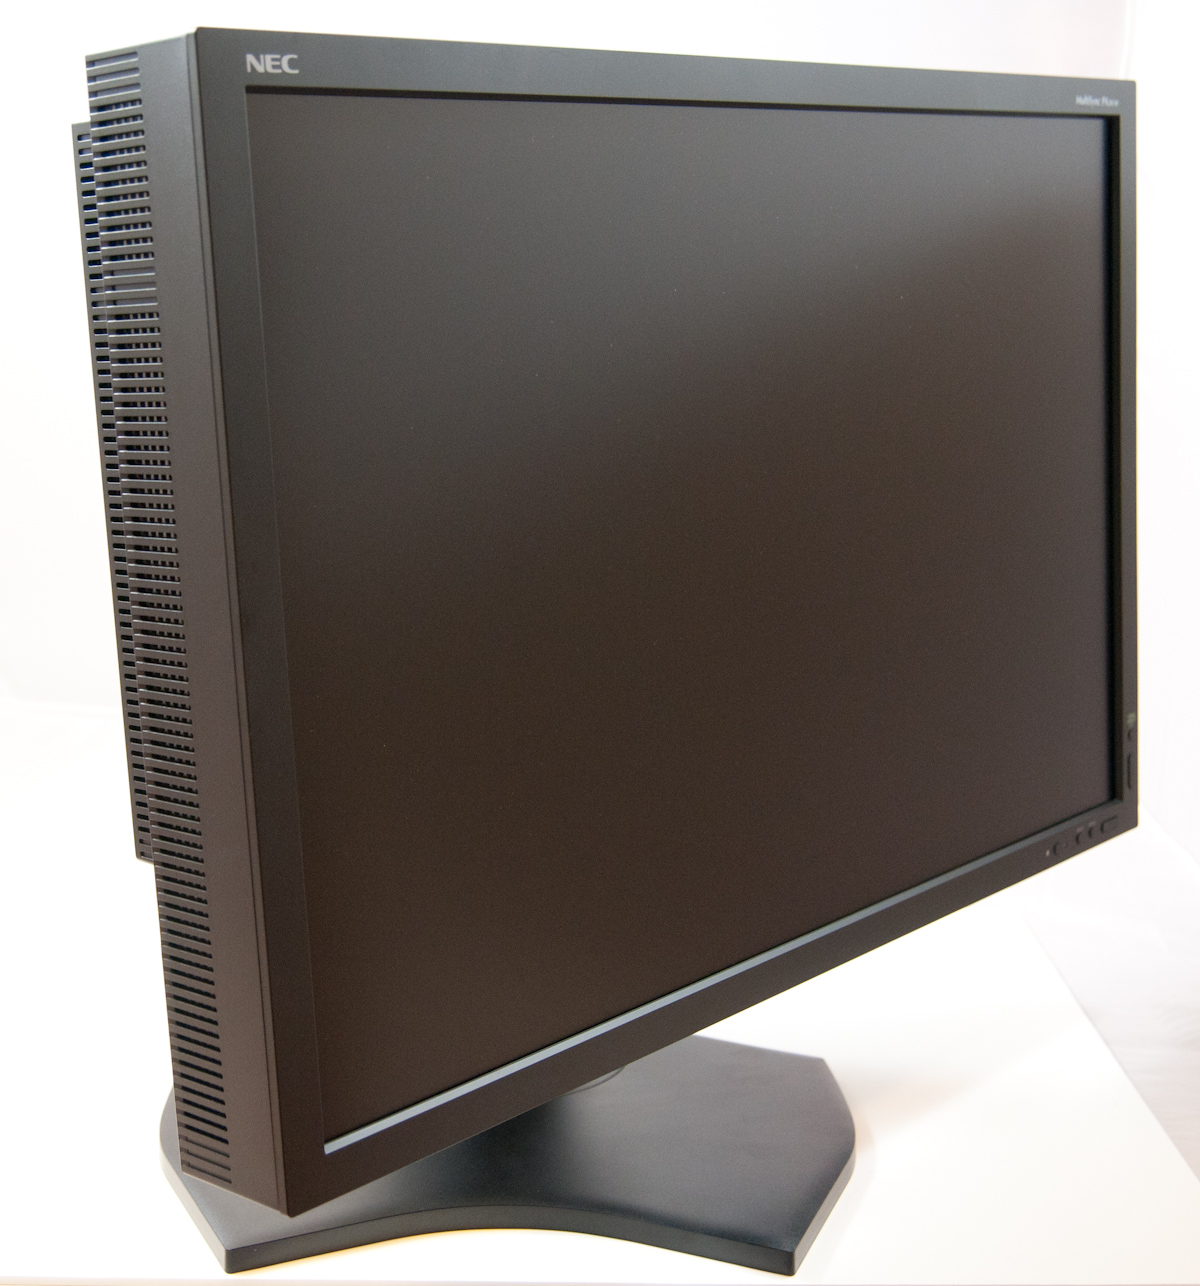 NEC PA301w: The Baddest 30-inch Display Around